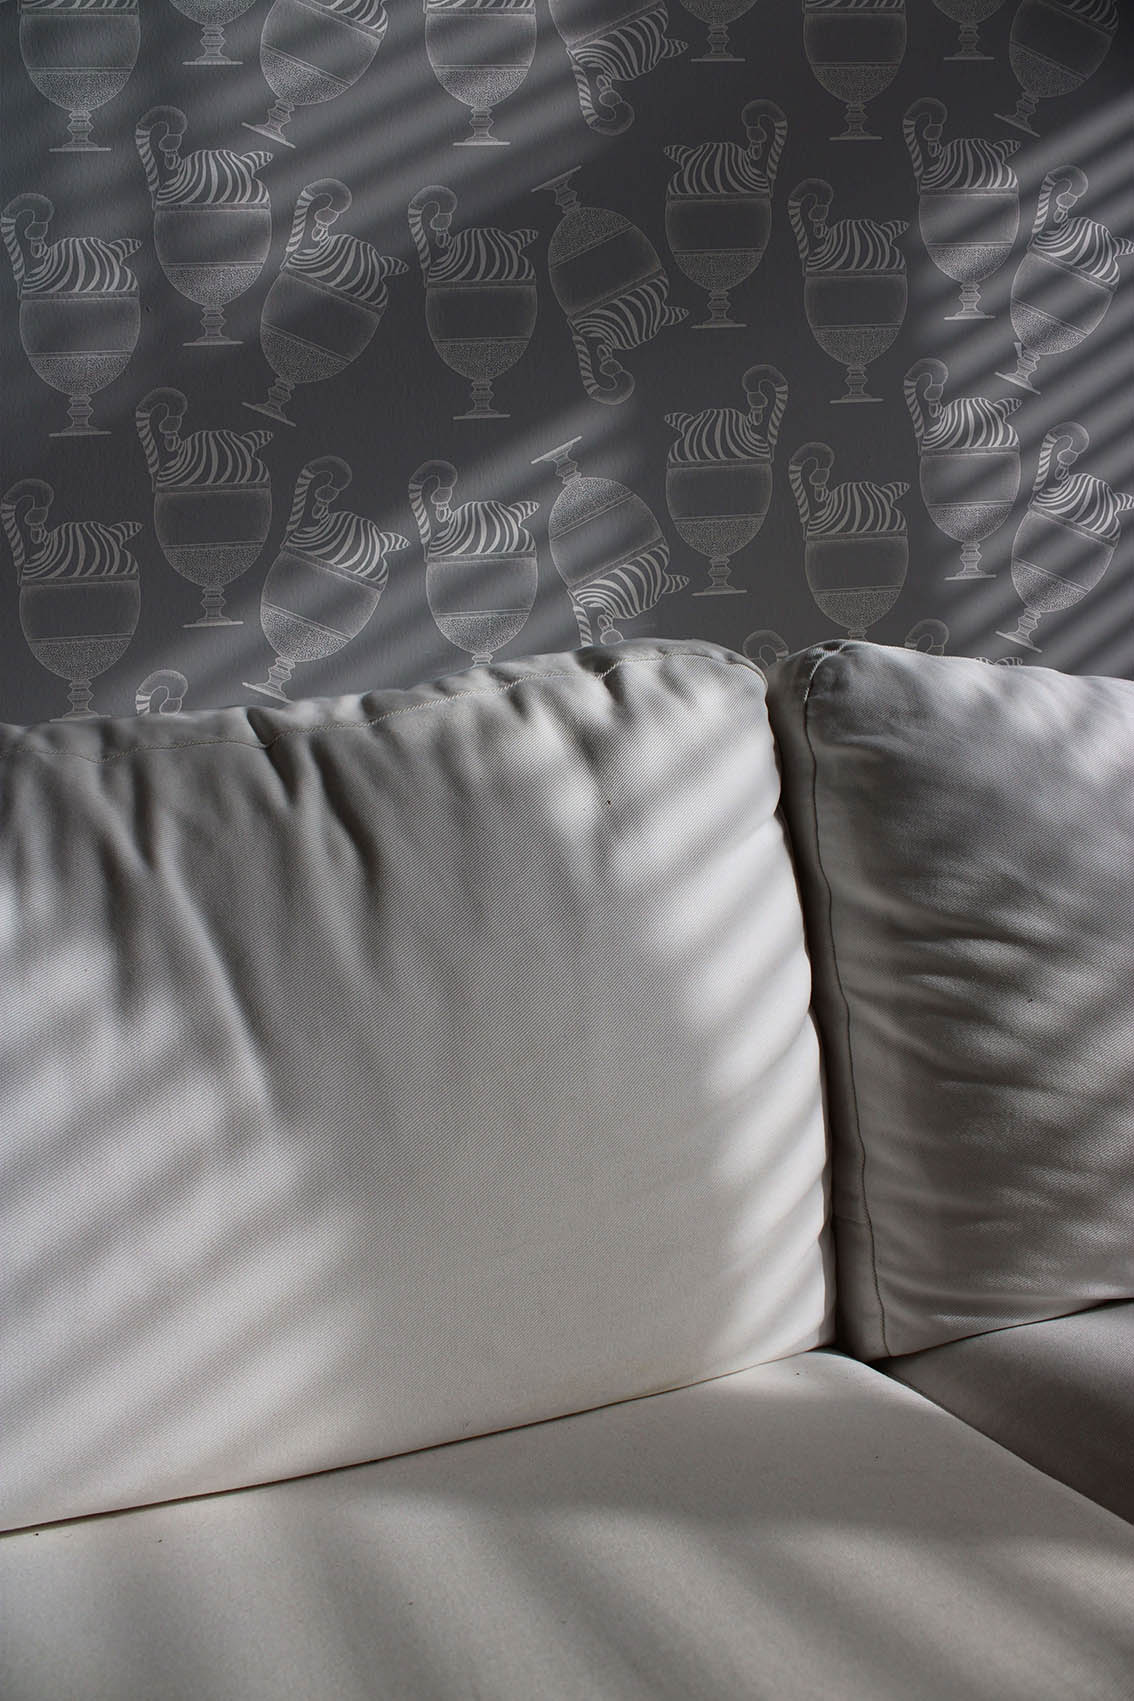 Wallpaper-Fontana-Grigio-Elefante-MaVoix-back-sofa-living-decor